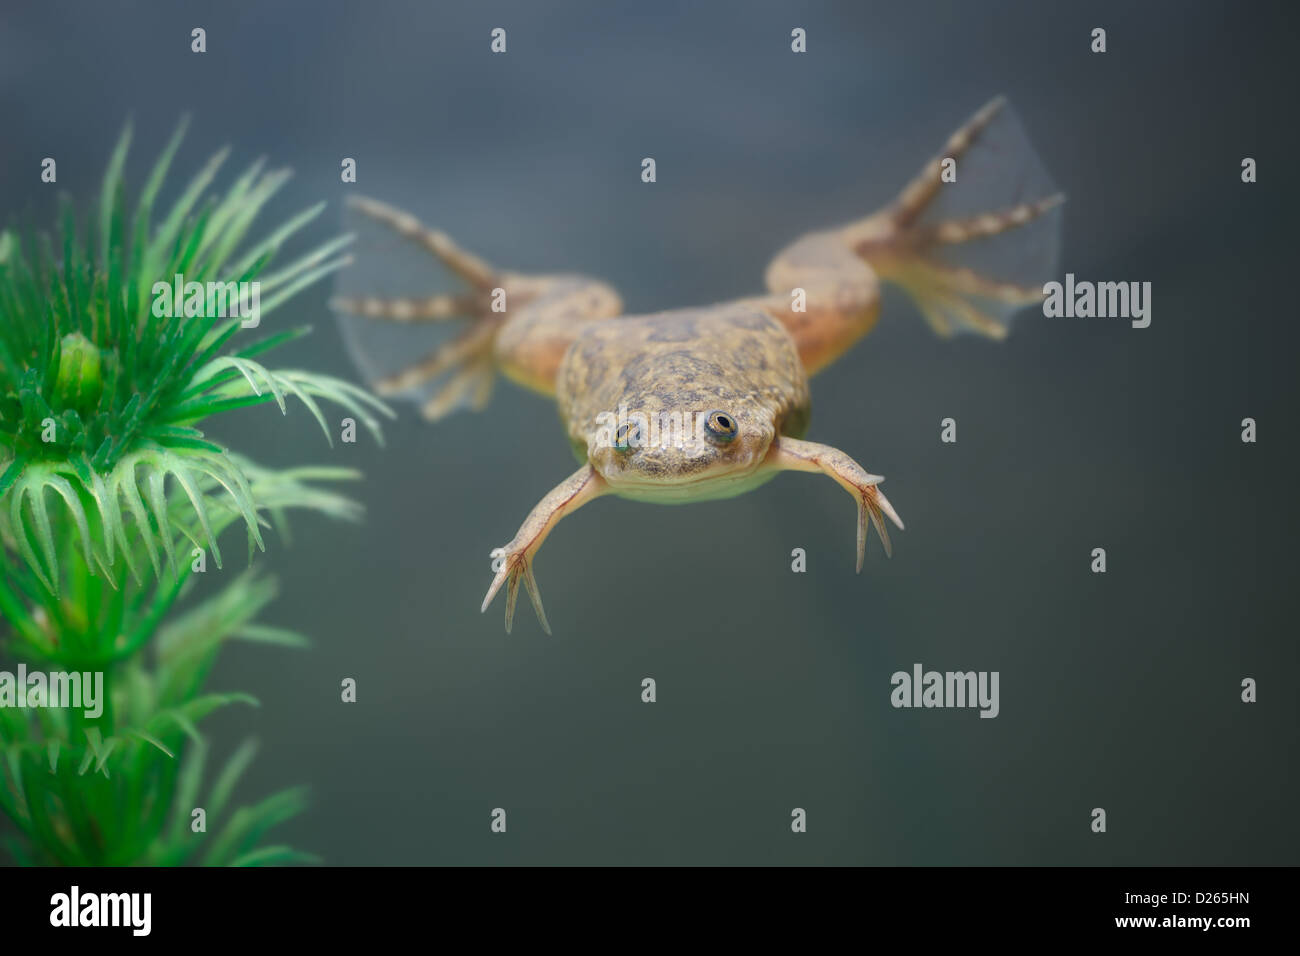 The yellow frog swim under water in an aquarium Stock Photo